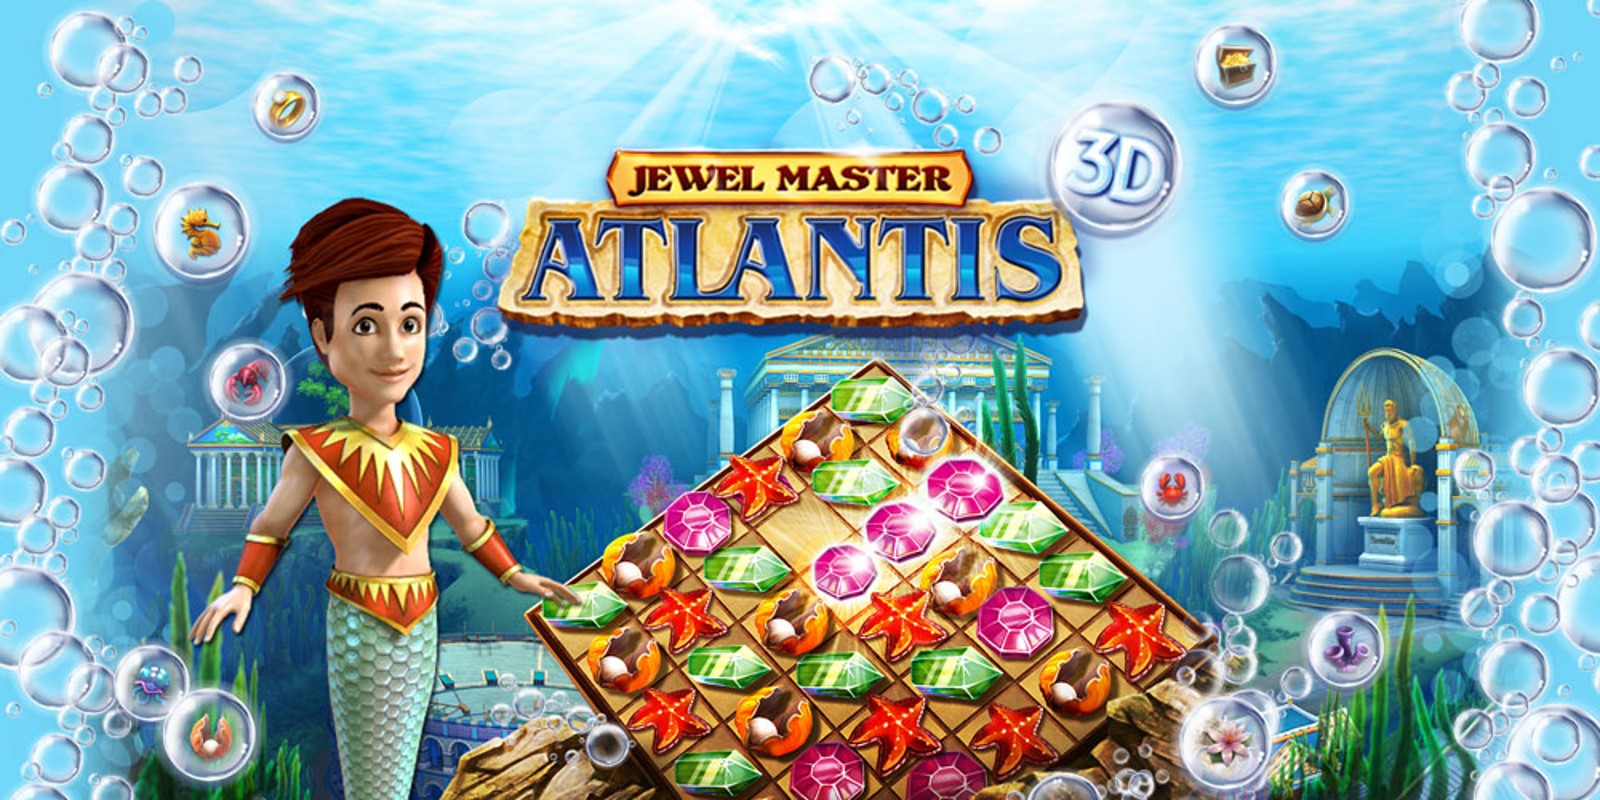 Jewel Master Atlantis 3D